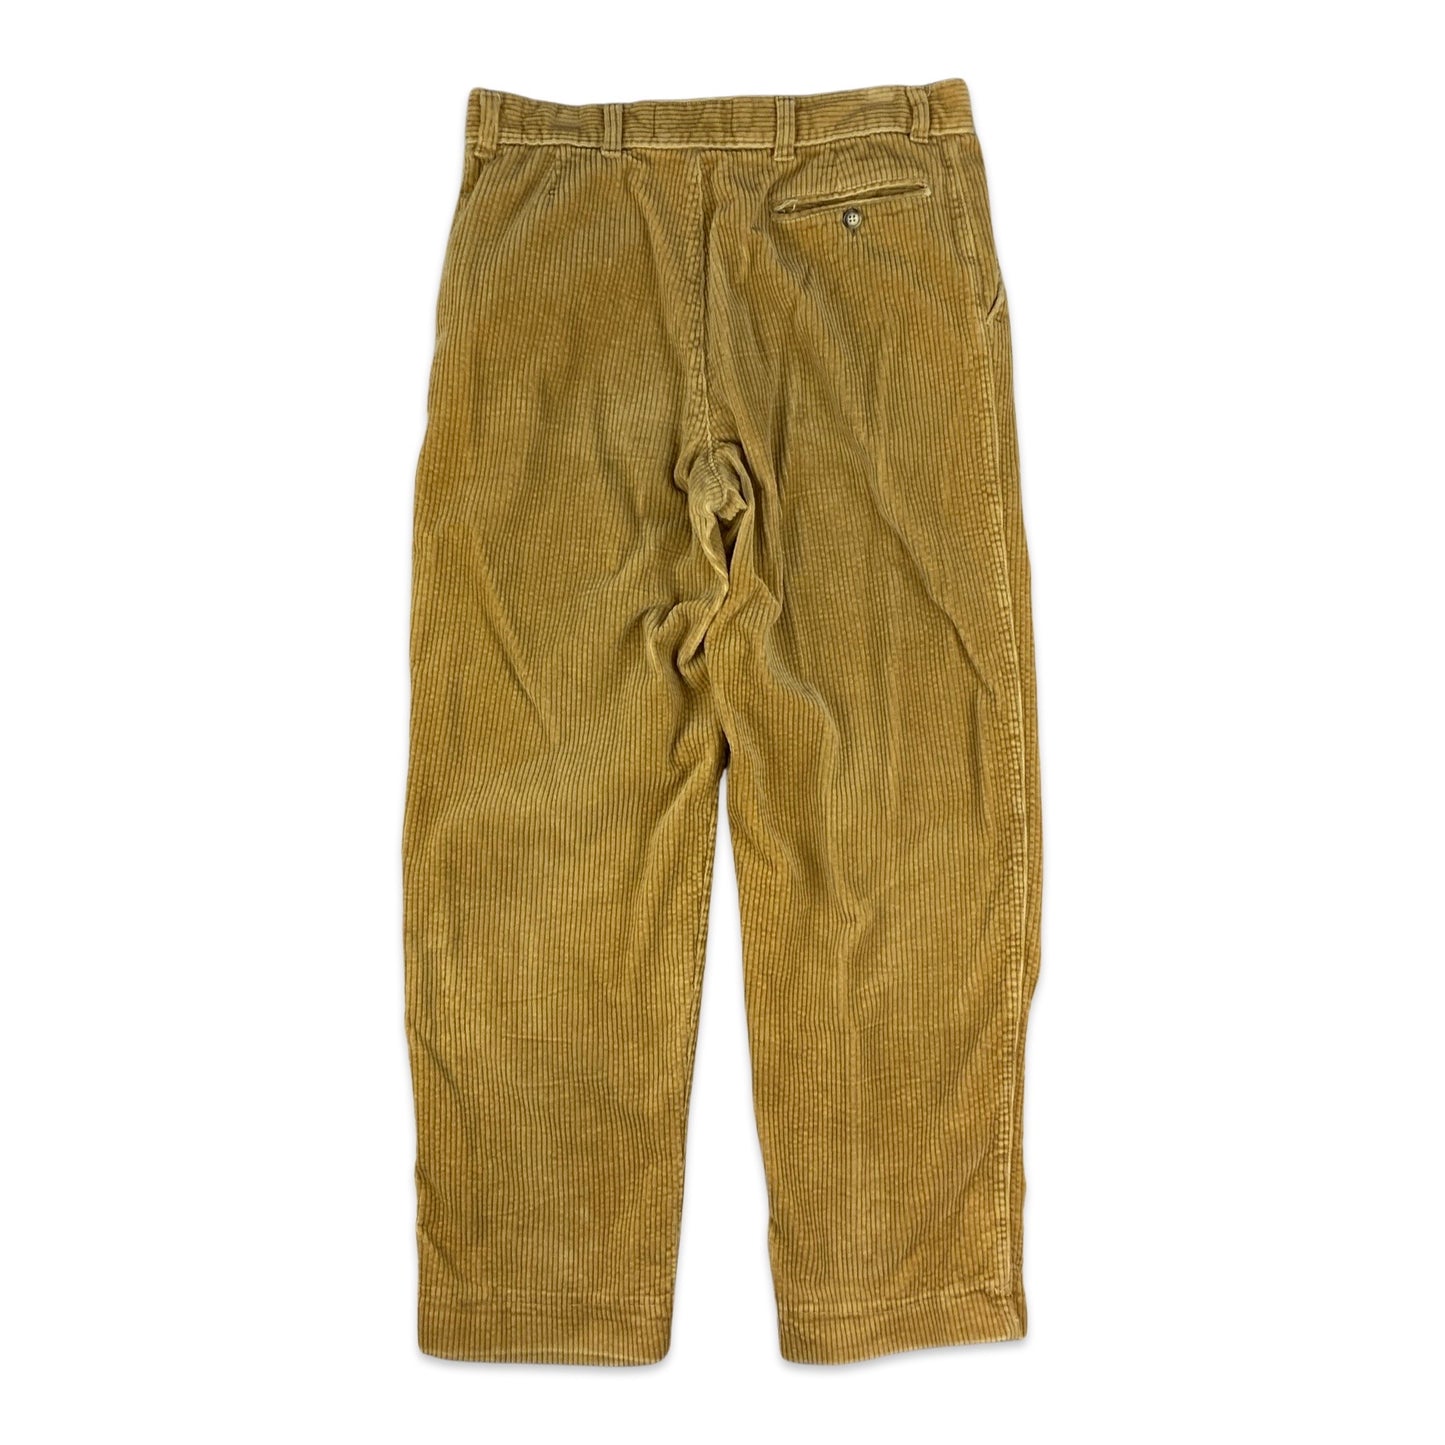 Vintage Beige Pleated Corduroy Trousers 34W 29L